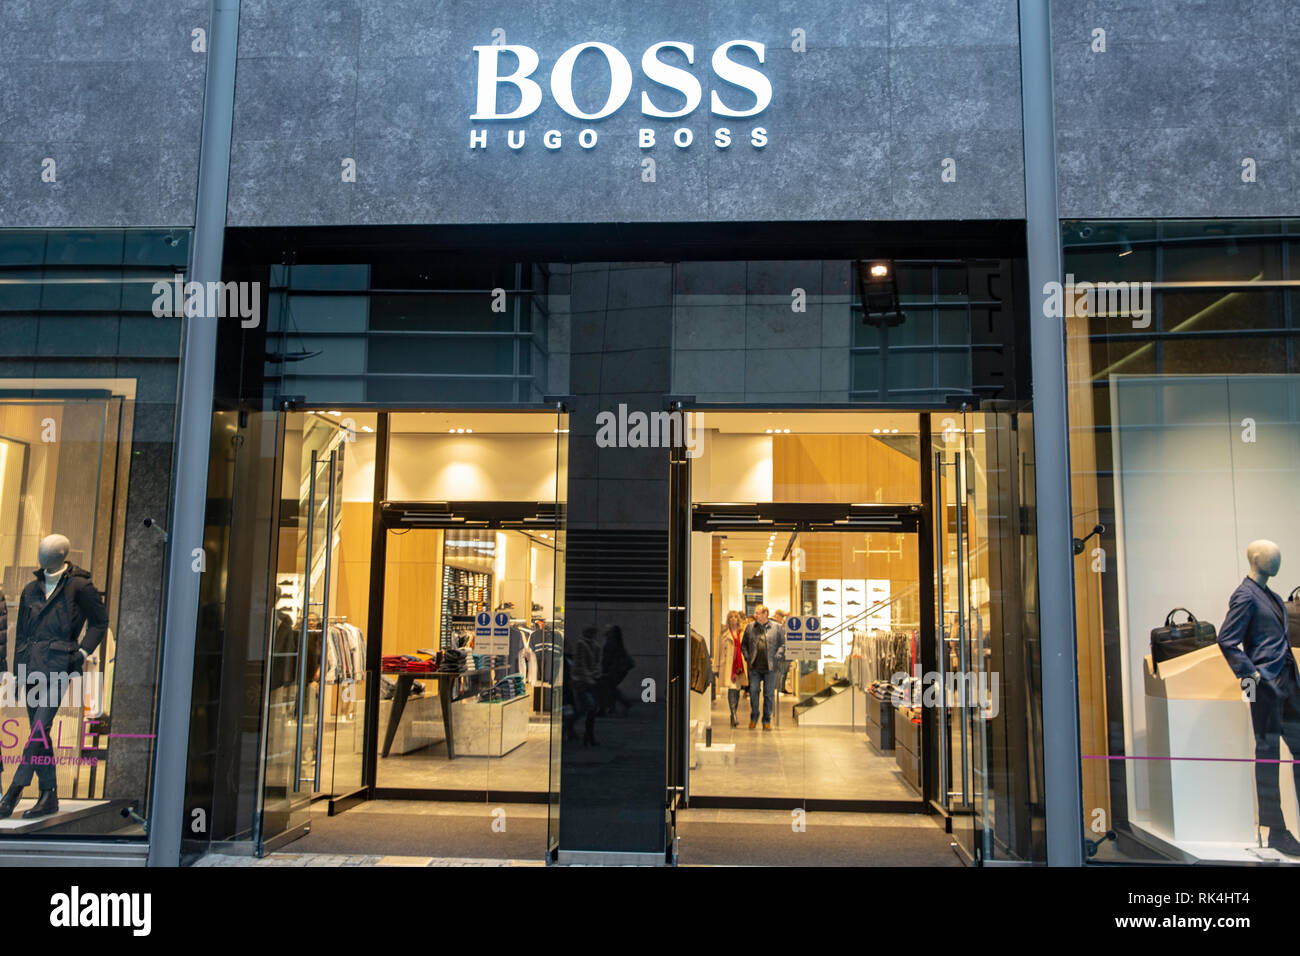 hugo boss clothing gateway